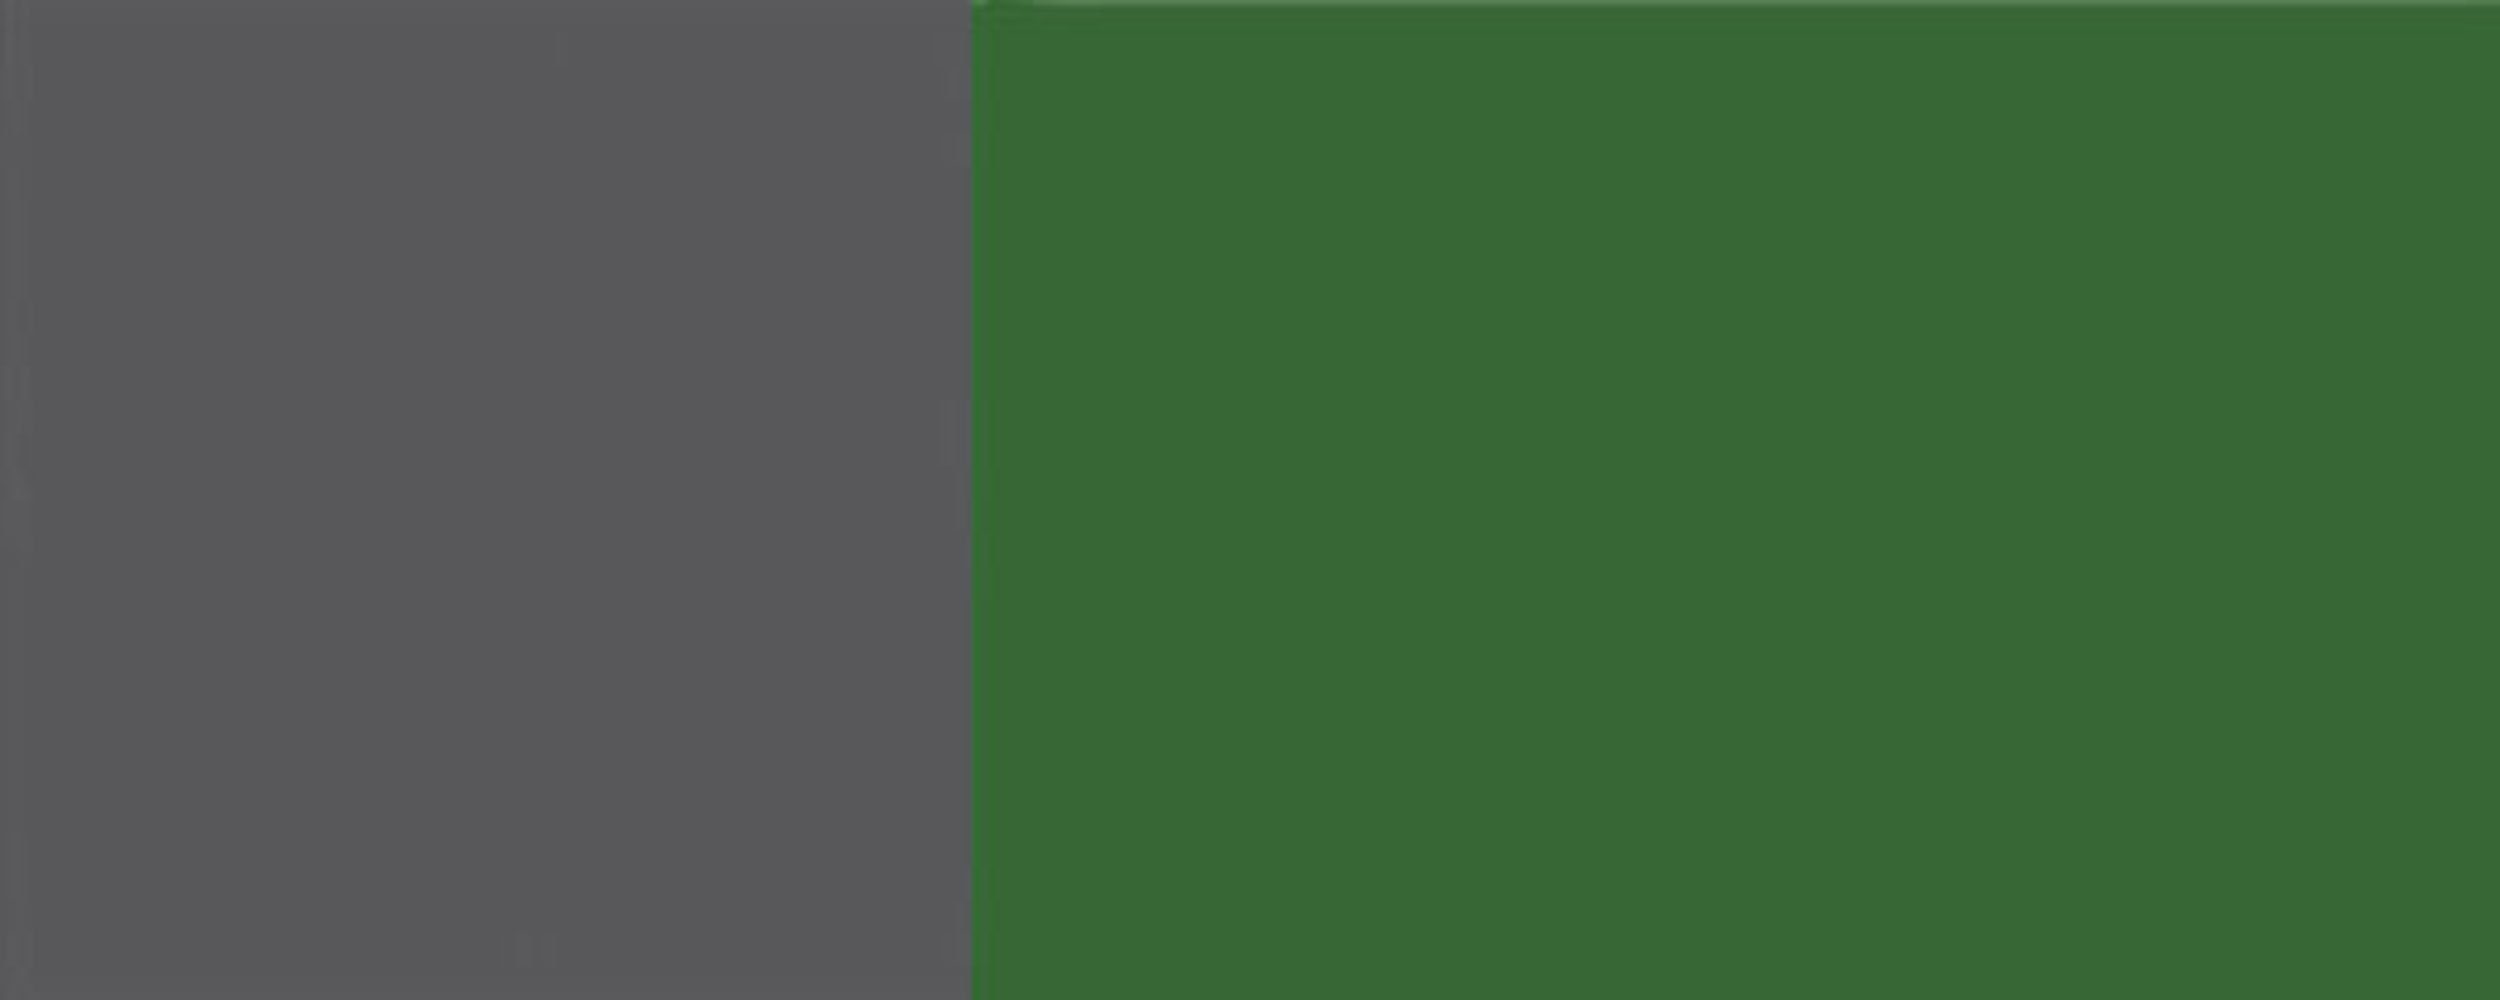 Hochglanz Klapphängeschrank 1-türig grifflos 50cm Front-, Florence smaragdgrün Feldmann-Wohnen 6001 wählbar Korpusfarbe (Florence) RAL und Ausführung